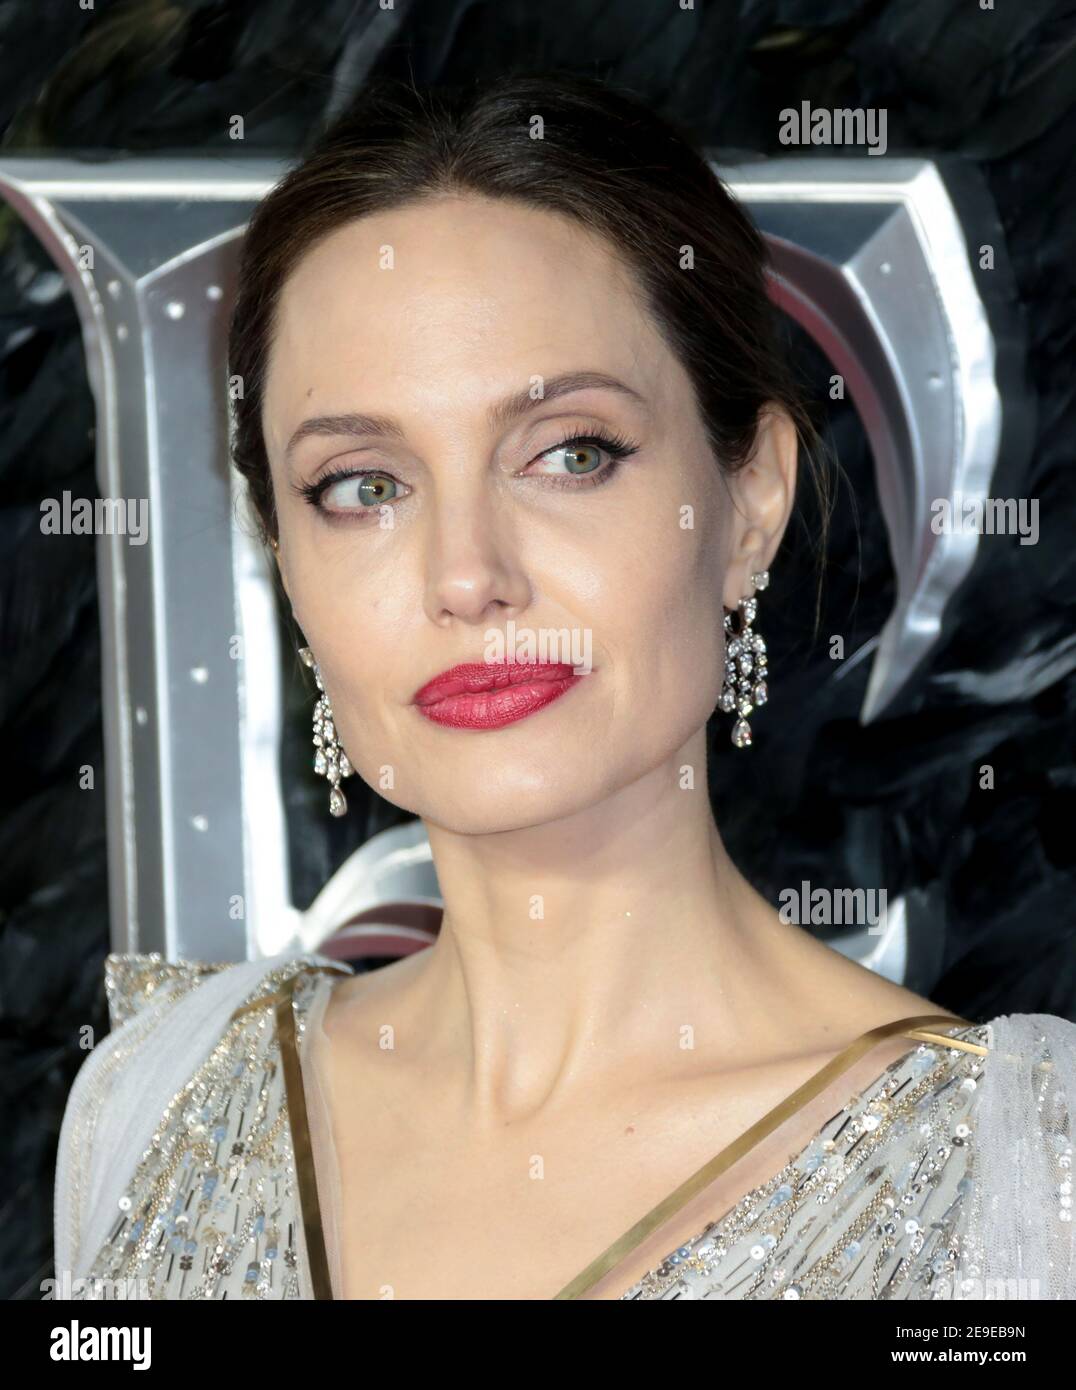 Oct 09, 2019 - London, England, UK - Maleficent: Mistress of Evil European Film Premiere  Photo Shows: Angelina Jolie Stock Photo